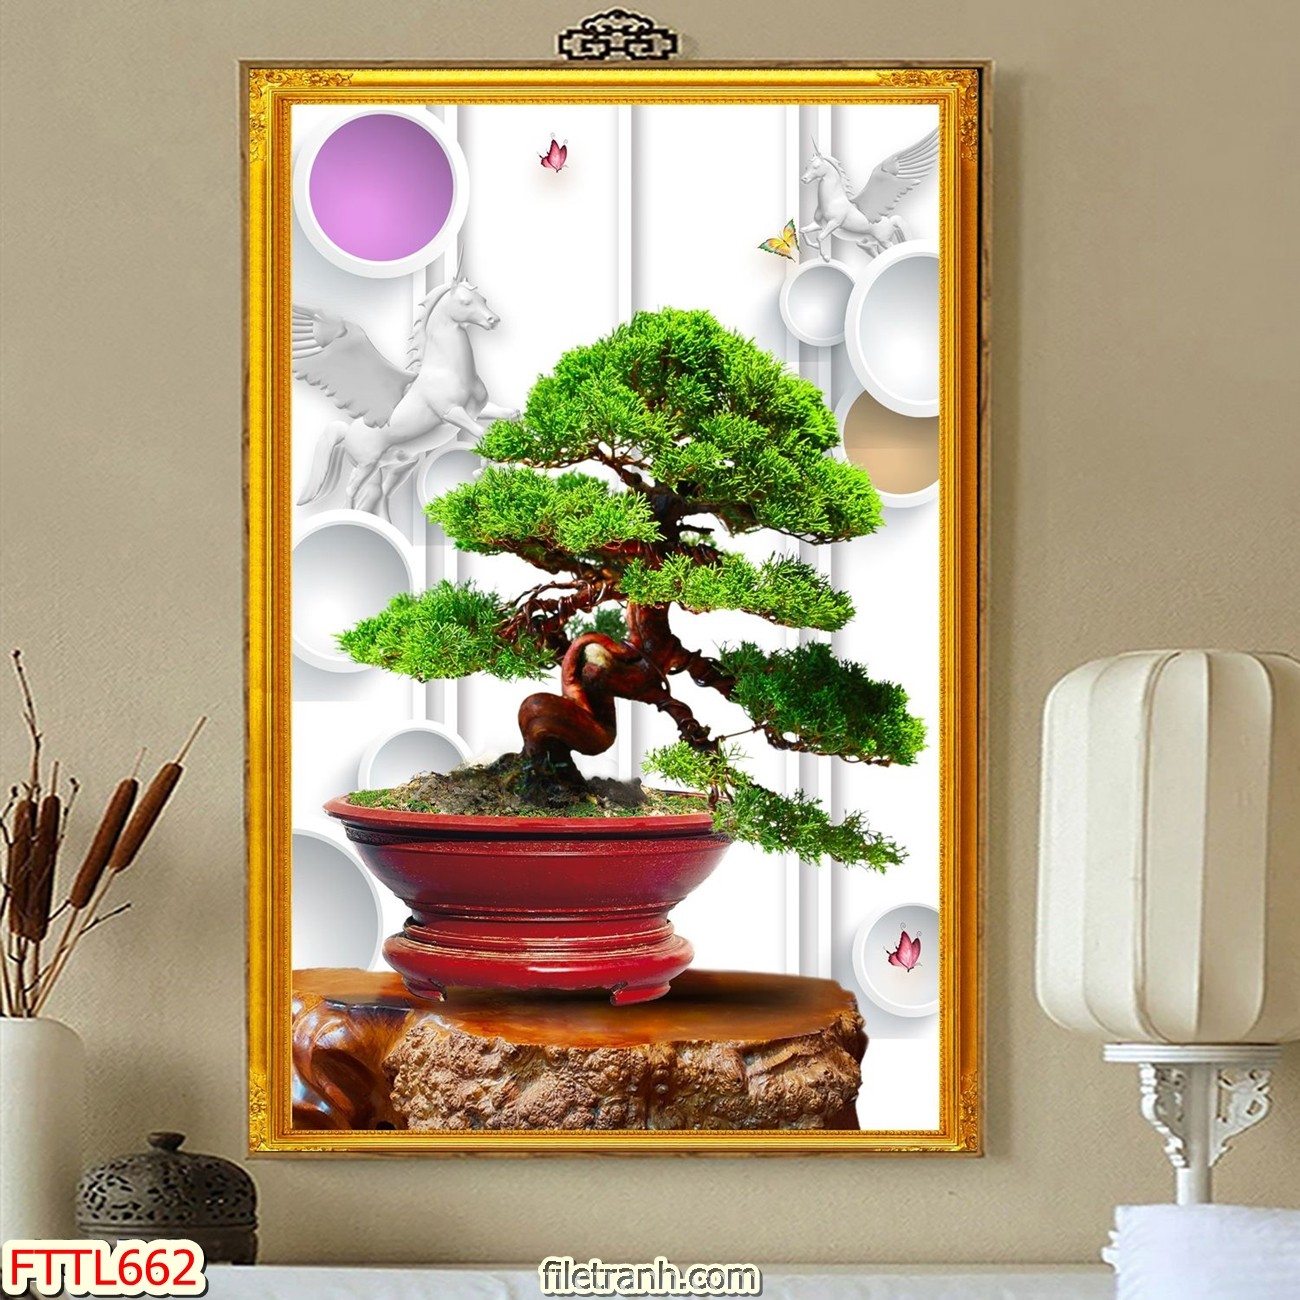 https://filetranh.com/file-tranh-chau-mai-bonsai/file-tranh-chau-mai-bonsai-fttl662.html